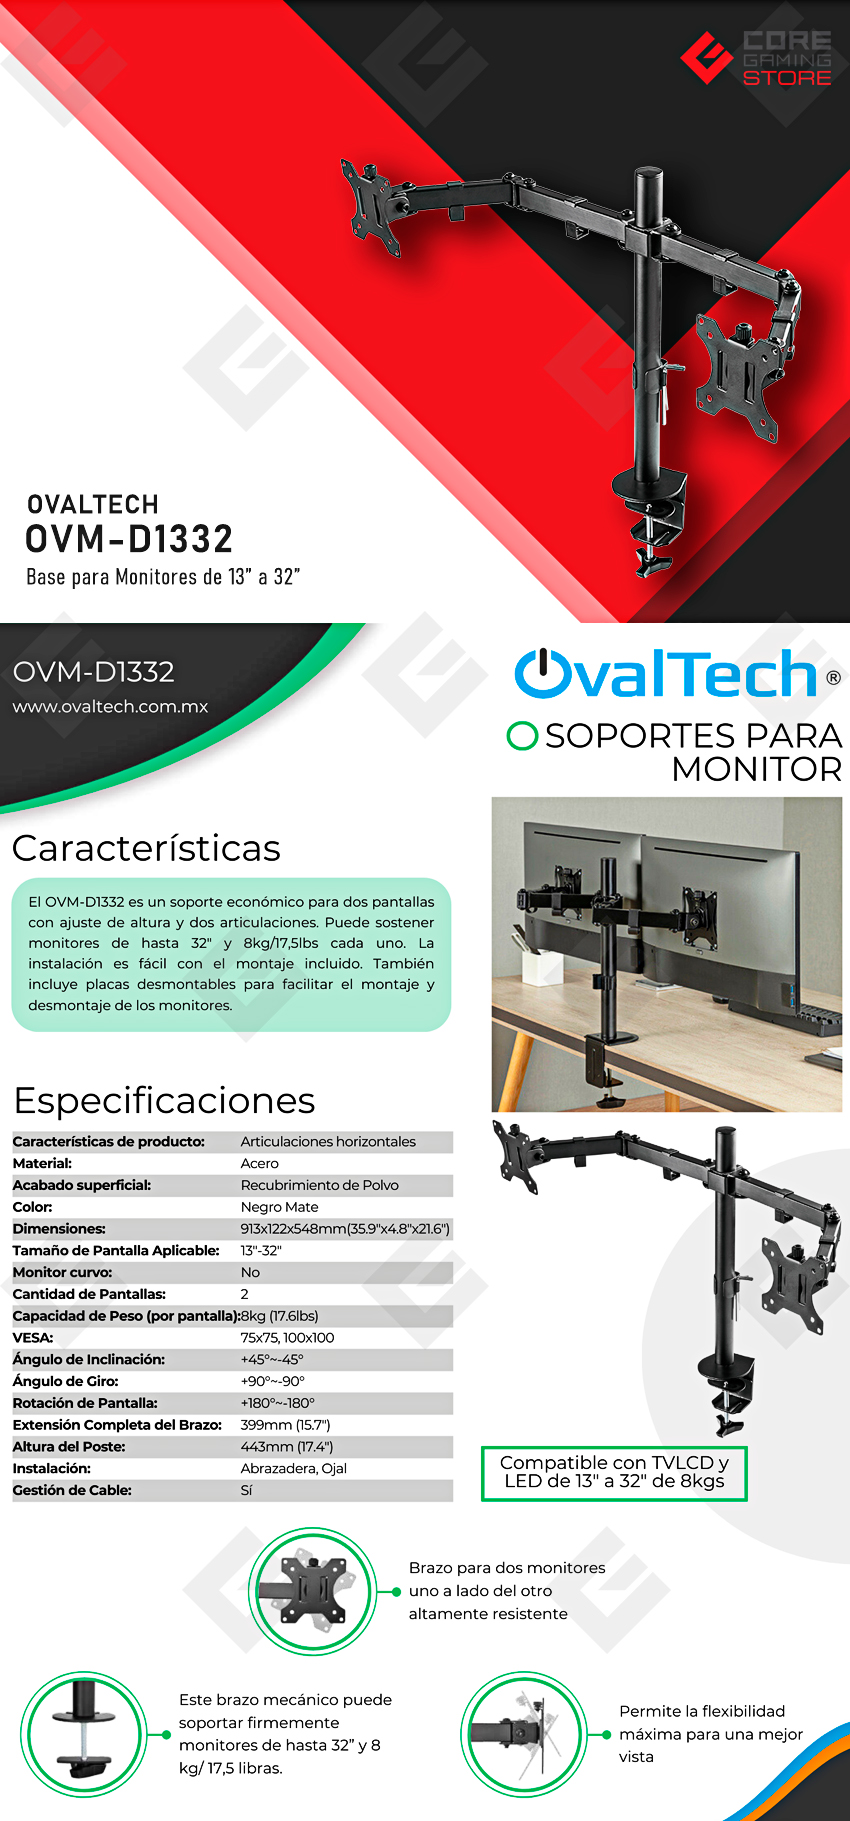 Soporte Dual de Brazo para Monitor Ovaltech OVM-D1332, Hasta 32", Sistema VESA, Sube y Baja, Inclinacion -45° a 45°, Horizontal o Vertical - OVM-D1332